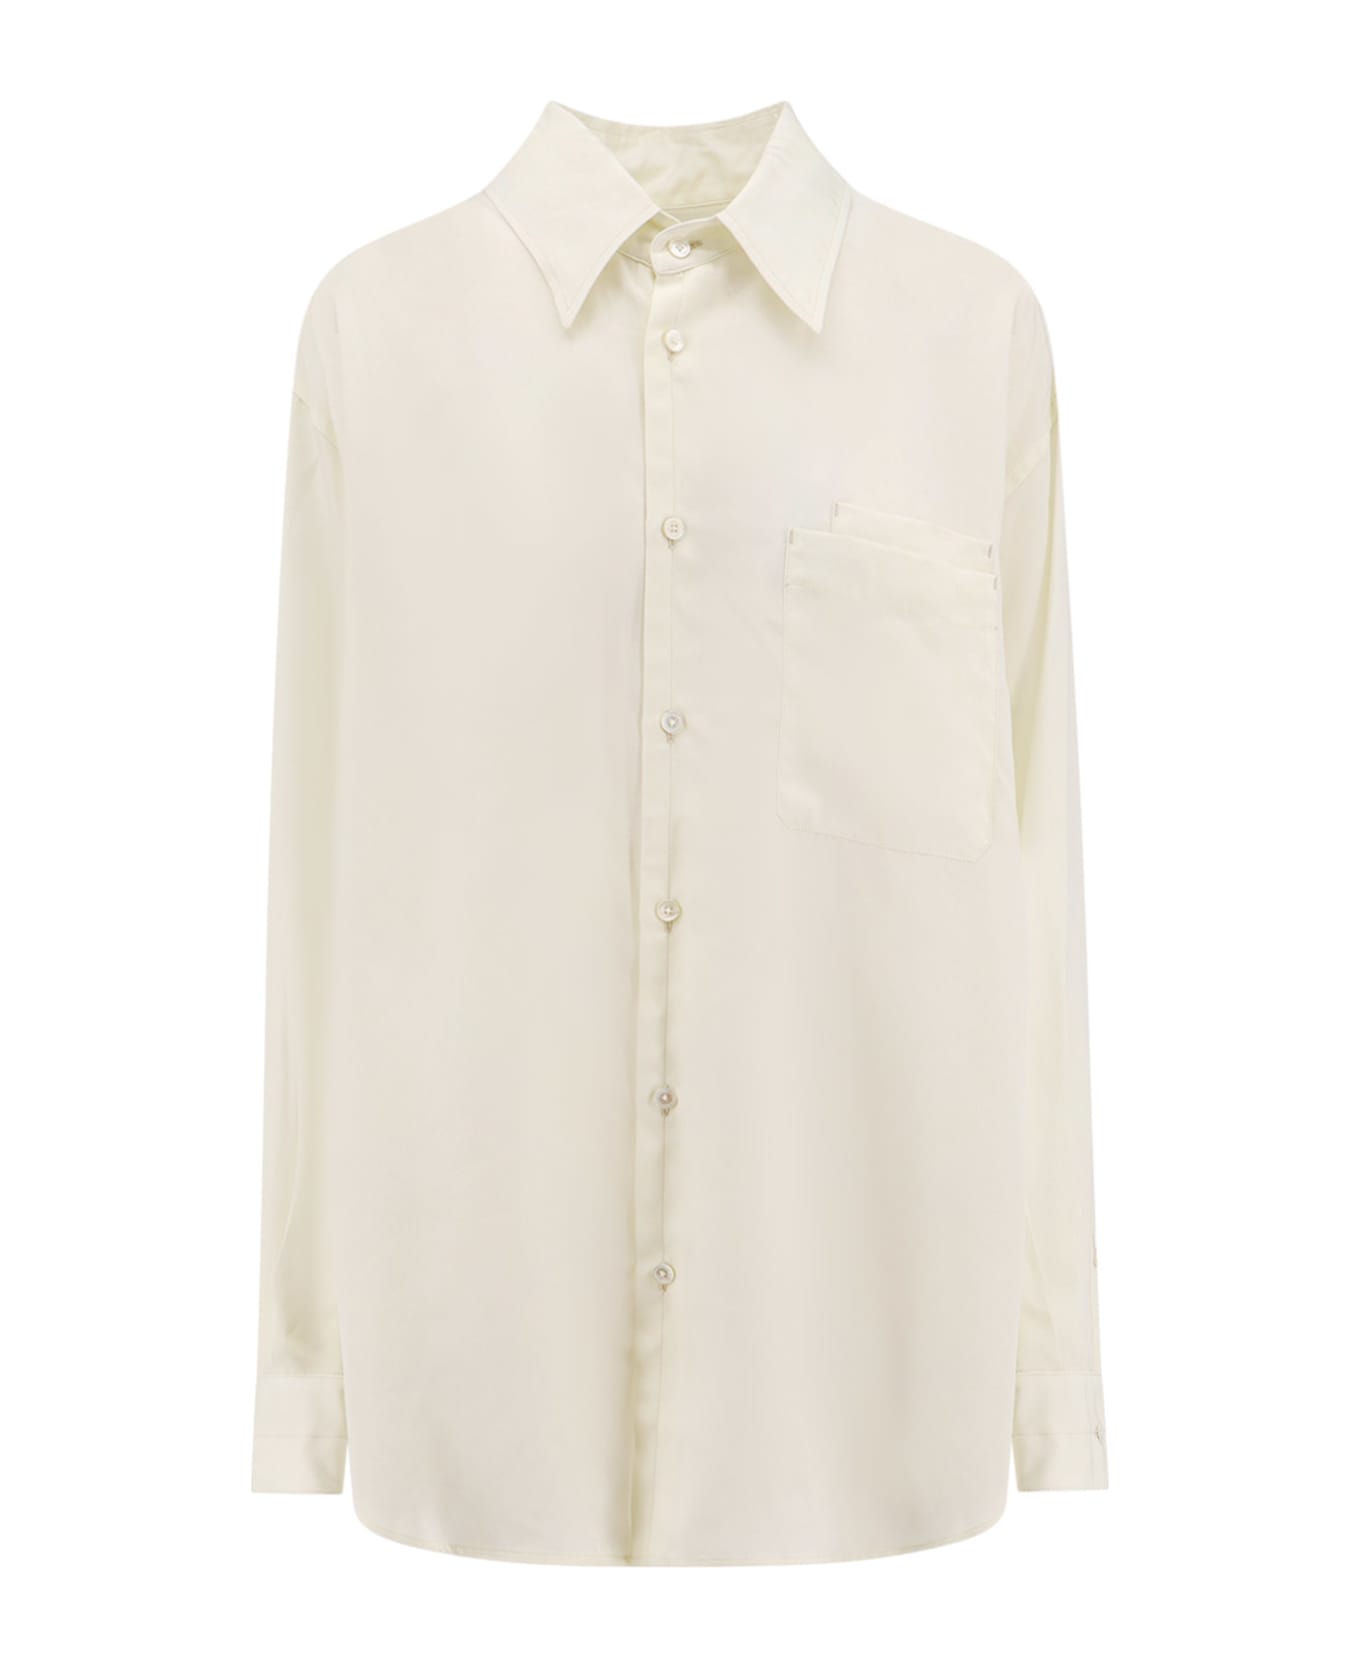 Lemaire Shirt - White